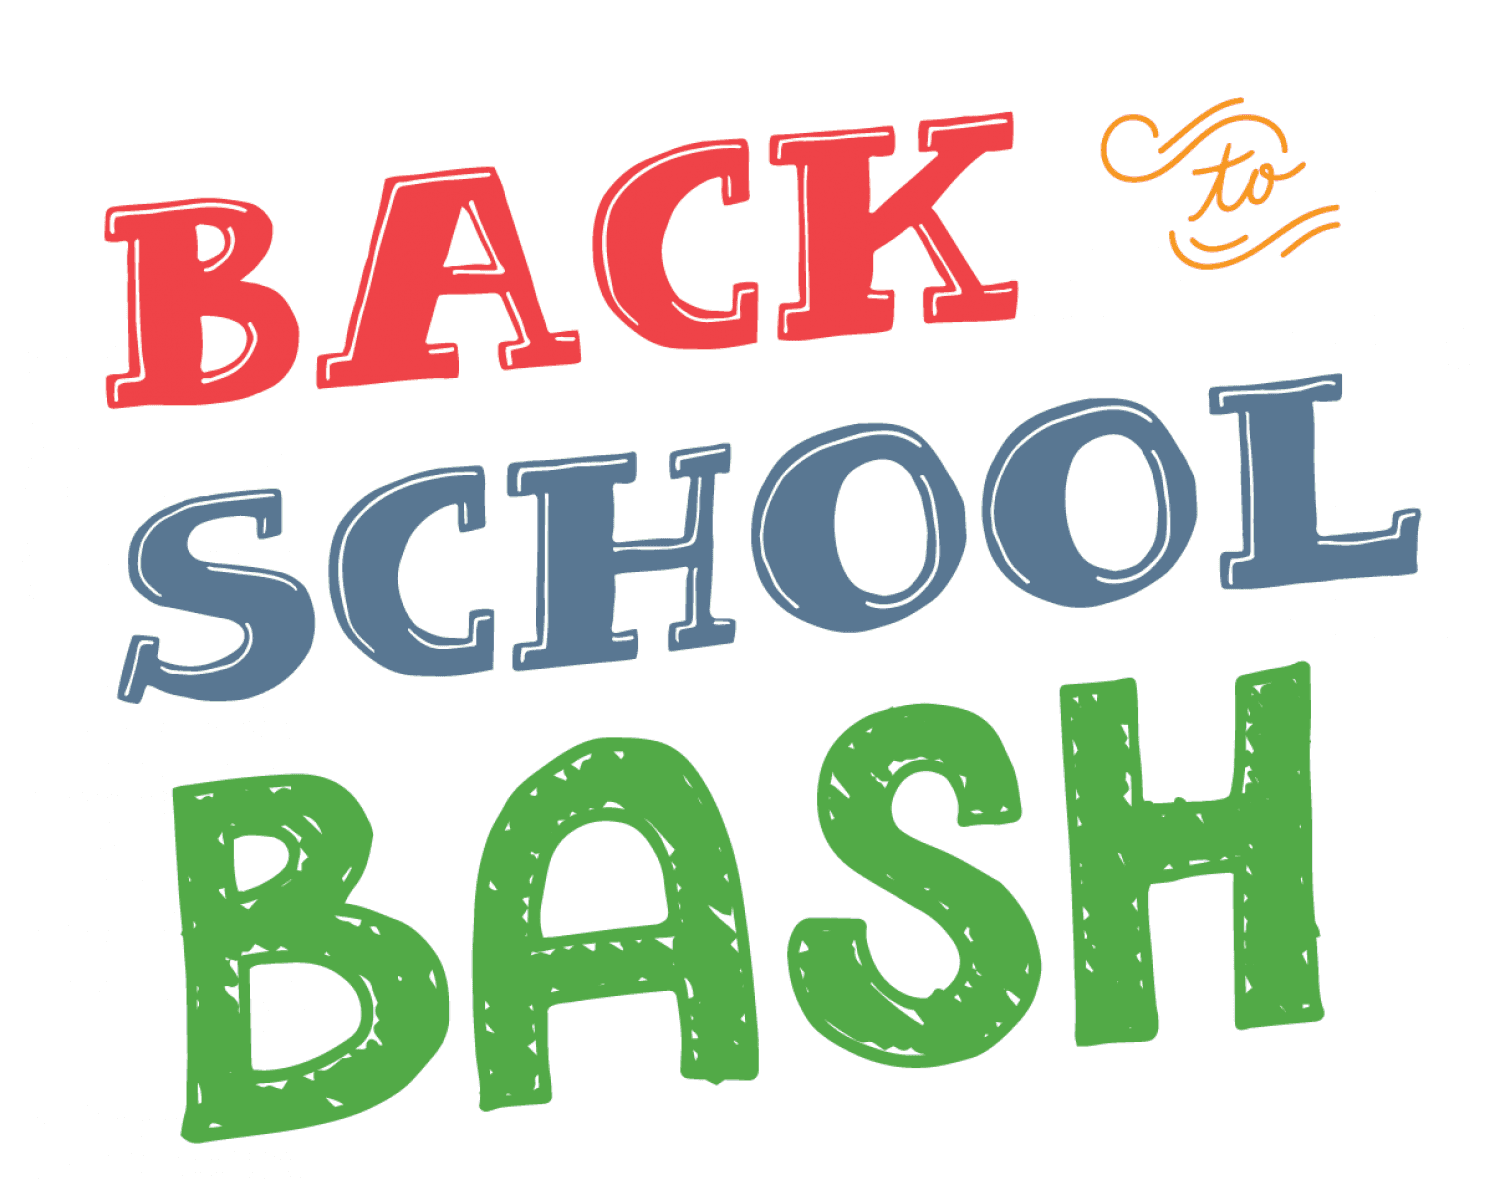 Back to School Bash
Sat Jul 23, 11:00 AM - Sat Jul 23, 2:00 PM